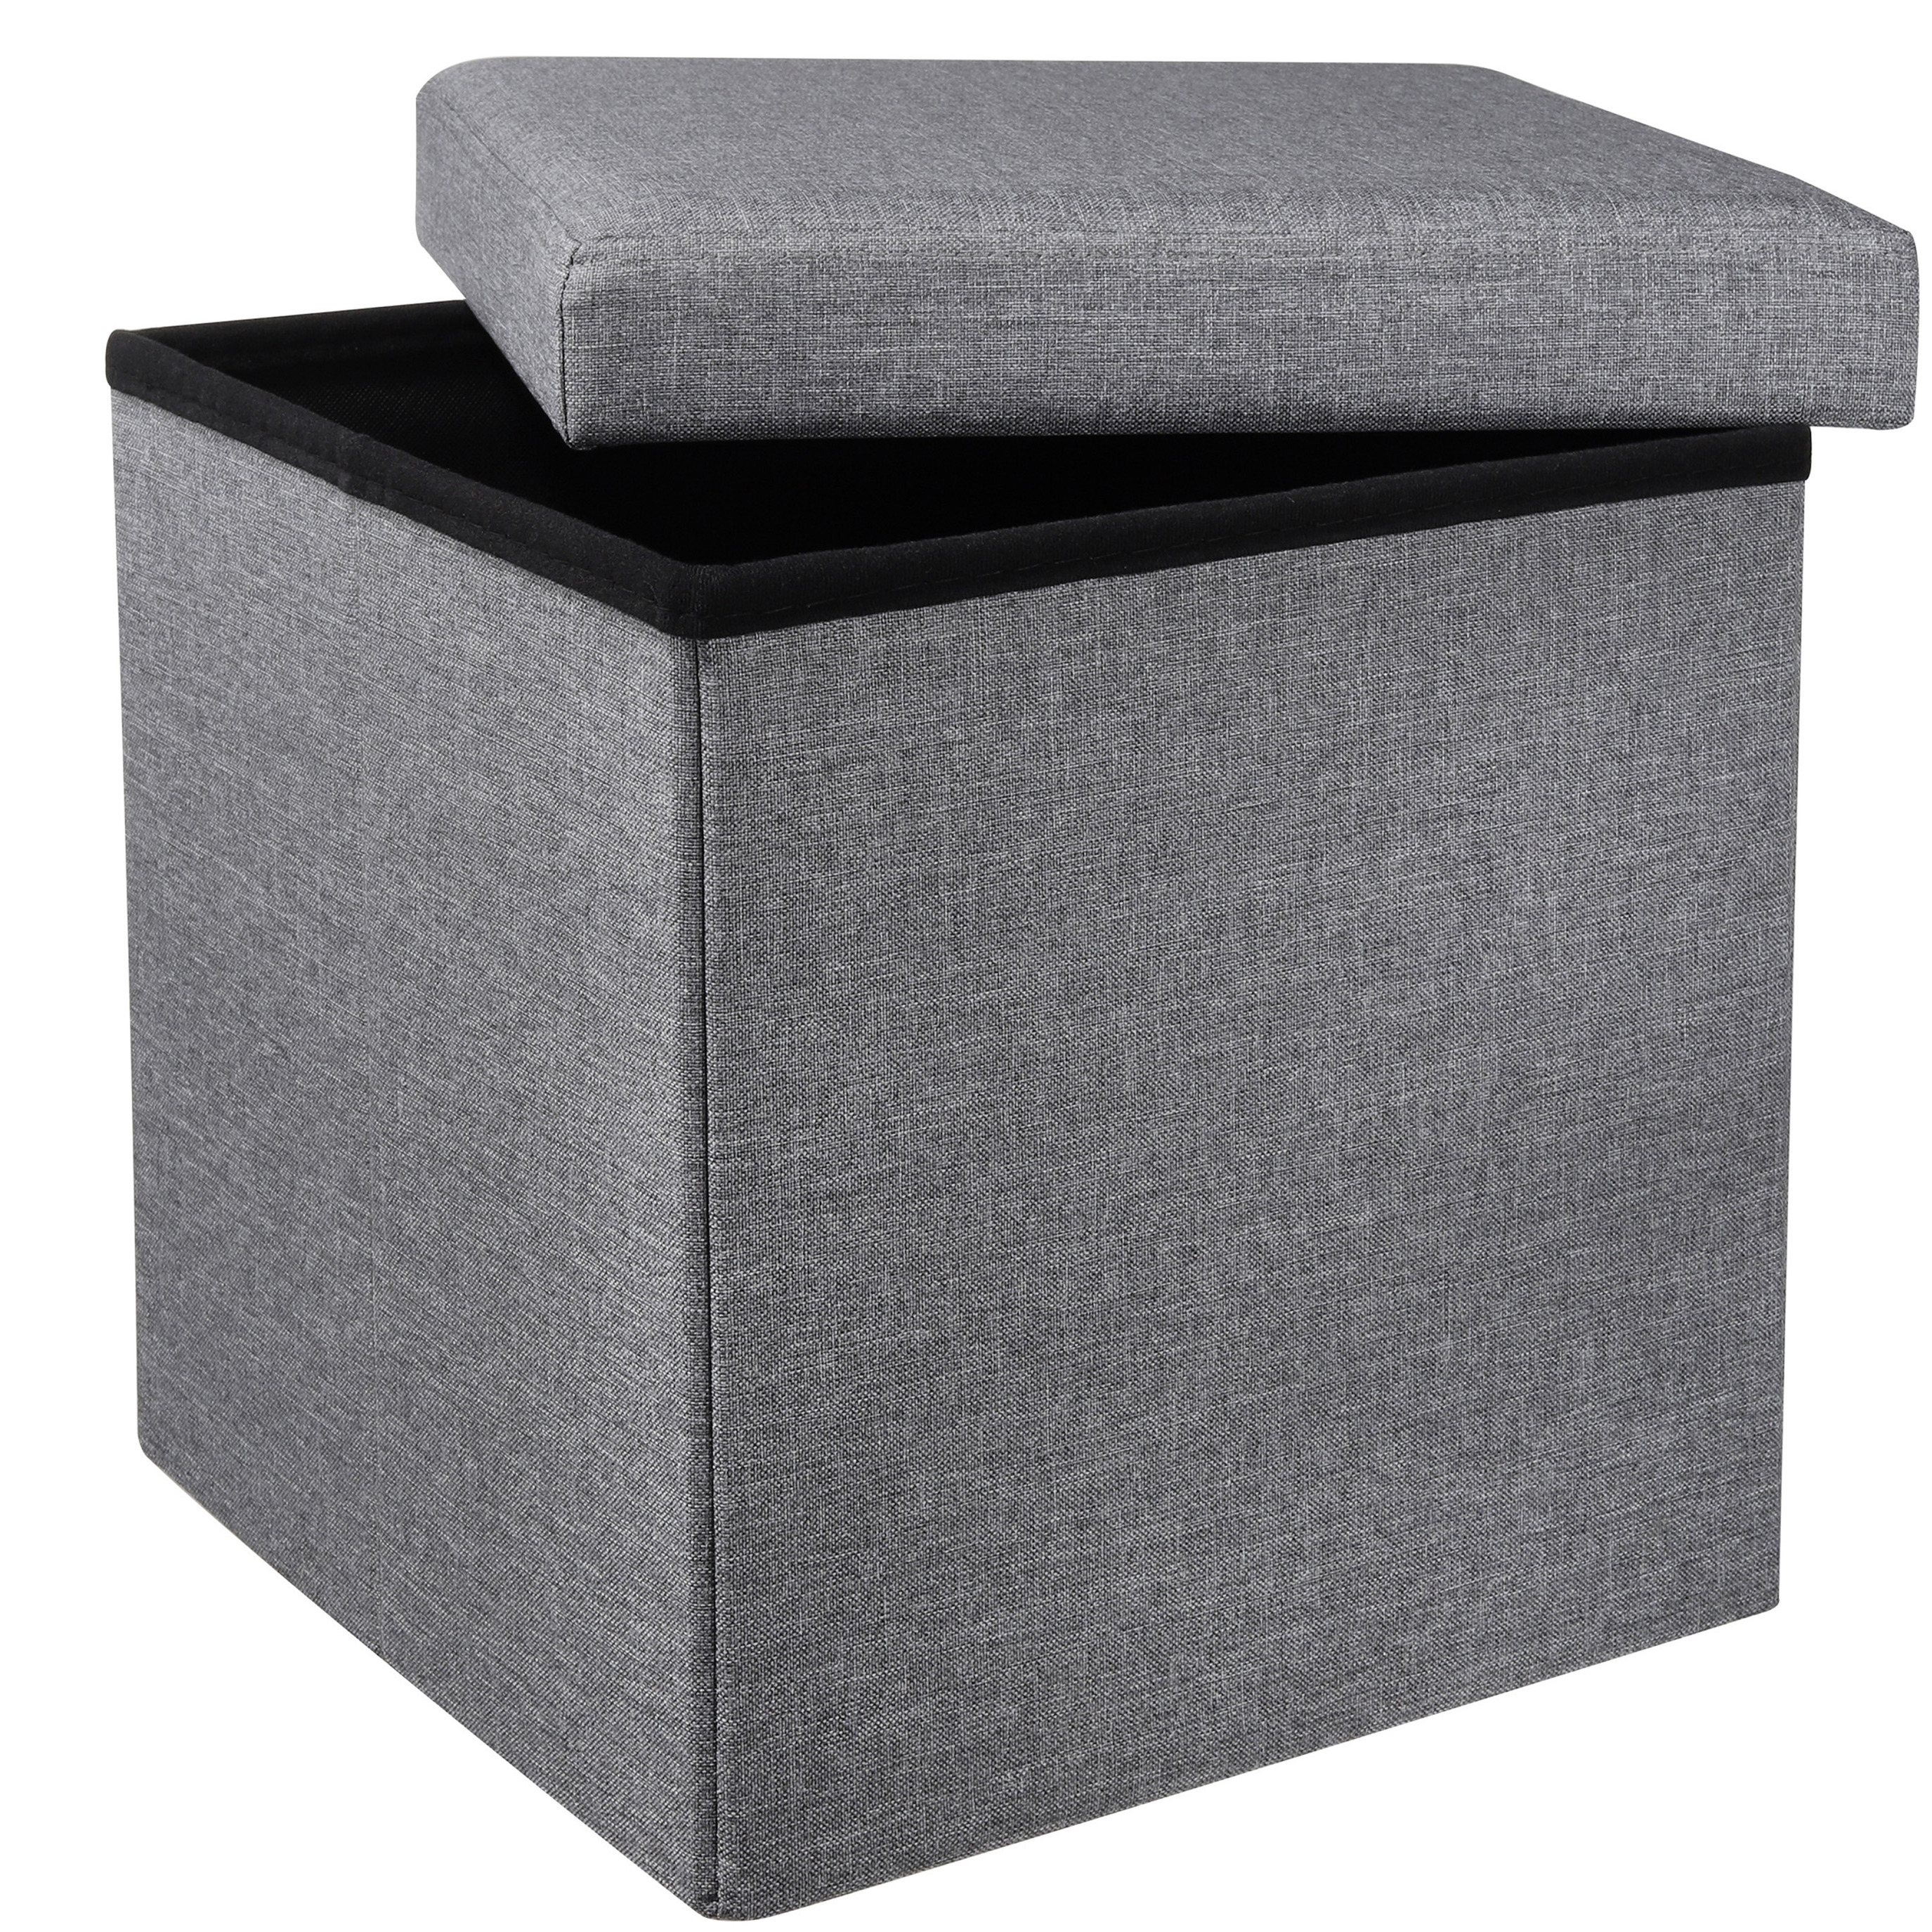 Poef hocker opbergbox grijs polyester-mdf 38 x 38 cm opvouwbaar